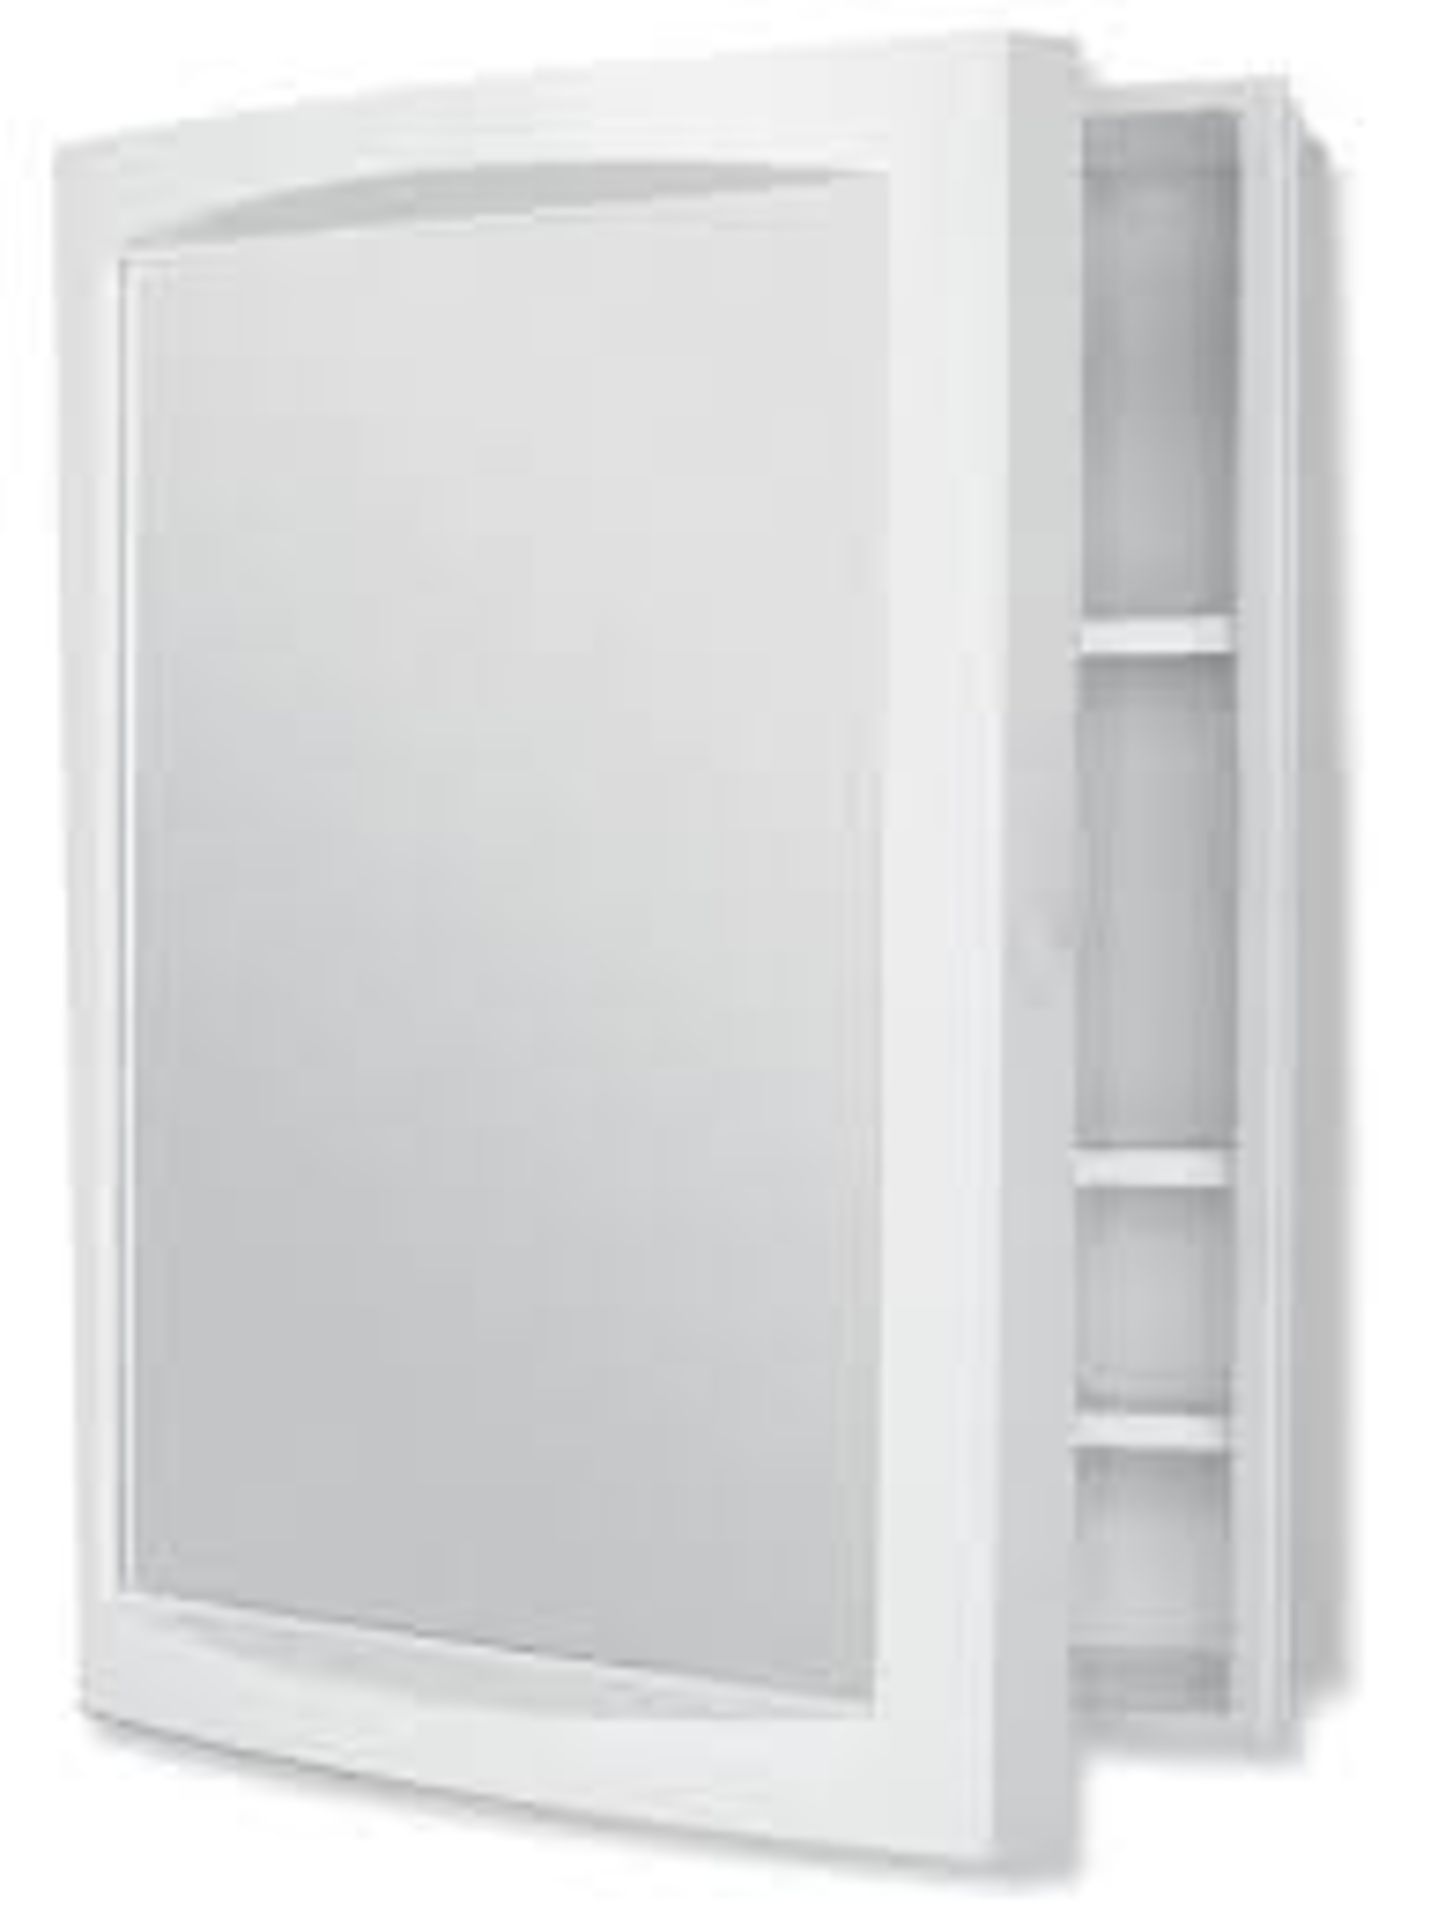 4 x Aida White Single Cabinet with Mirrored door. - S2.7.